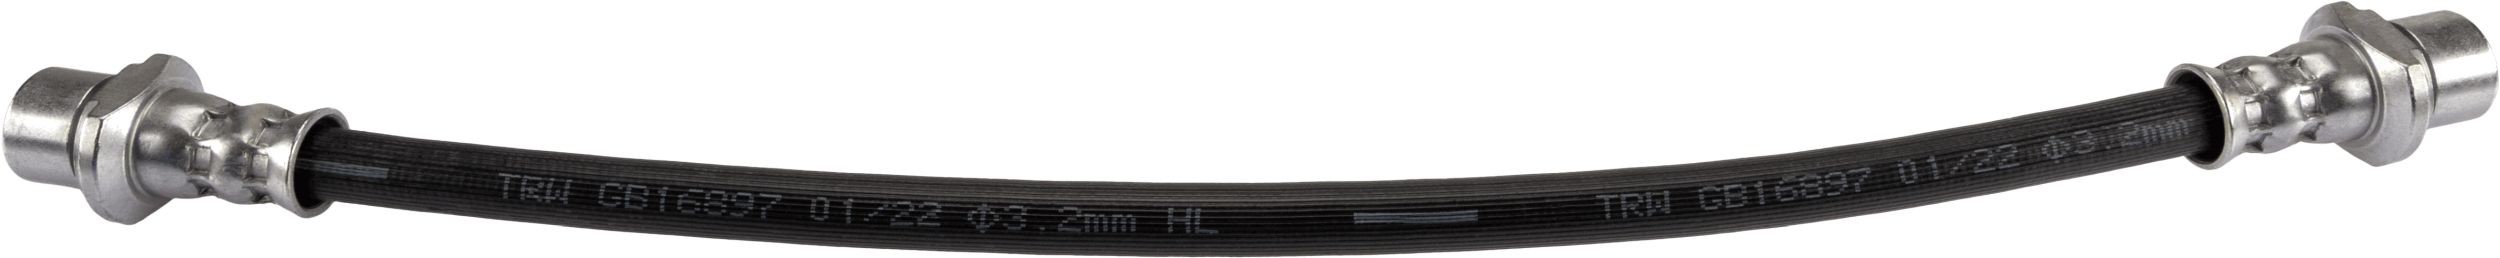 TRW 206 mm, M10x1, Internal Thread Length: 206mm, Thread Size 1: M10x1, Thread Size 2: Banjo Brake line PHD2104 buy